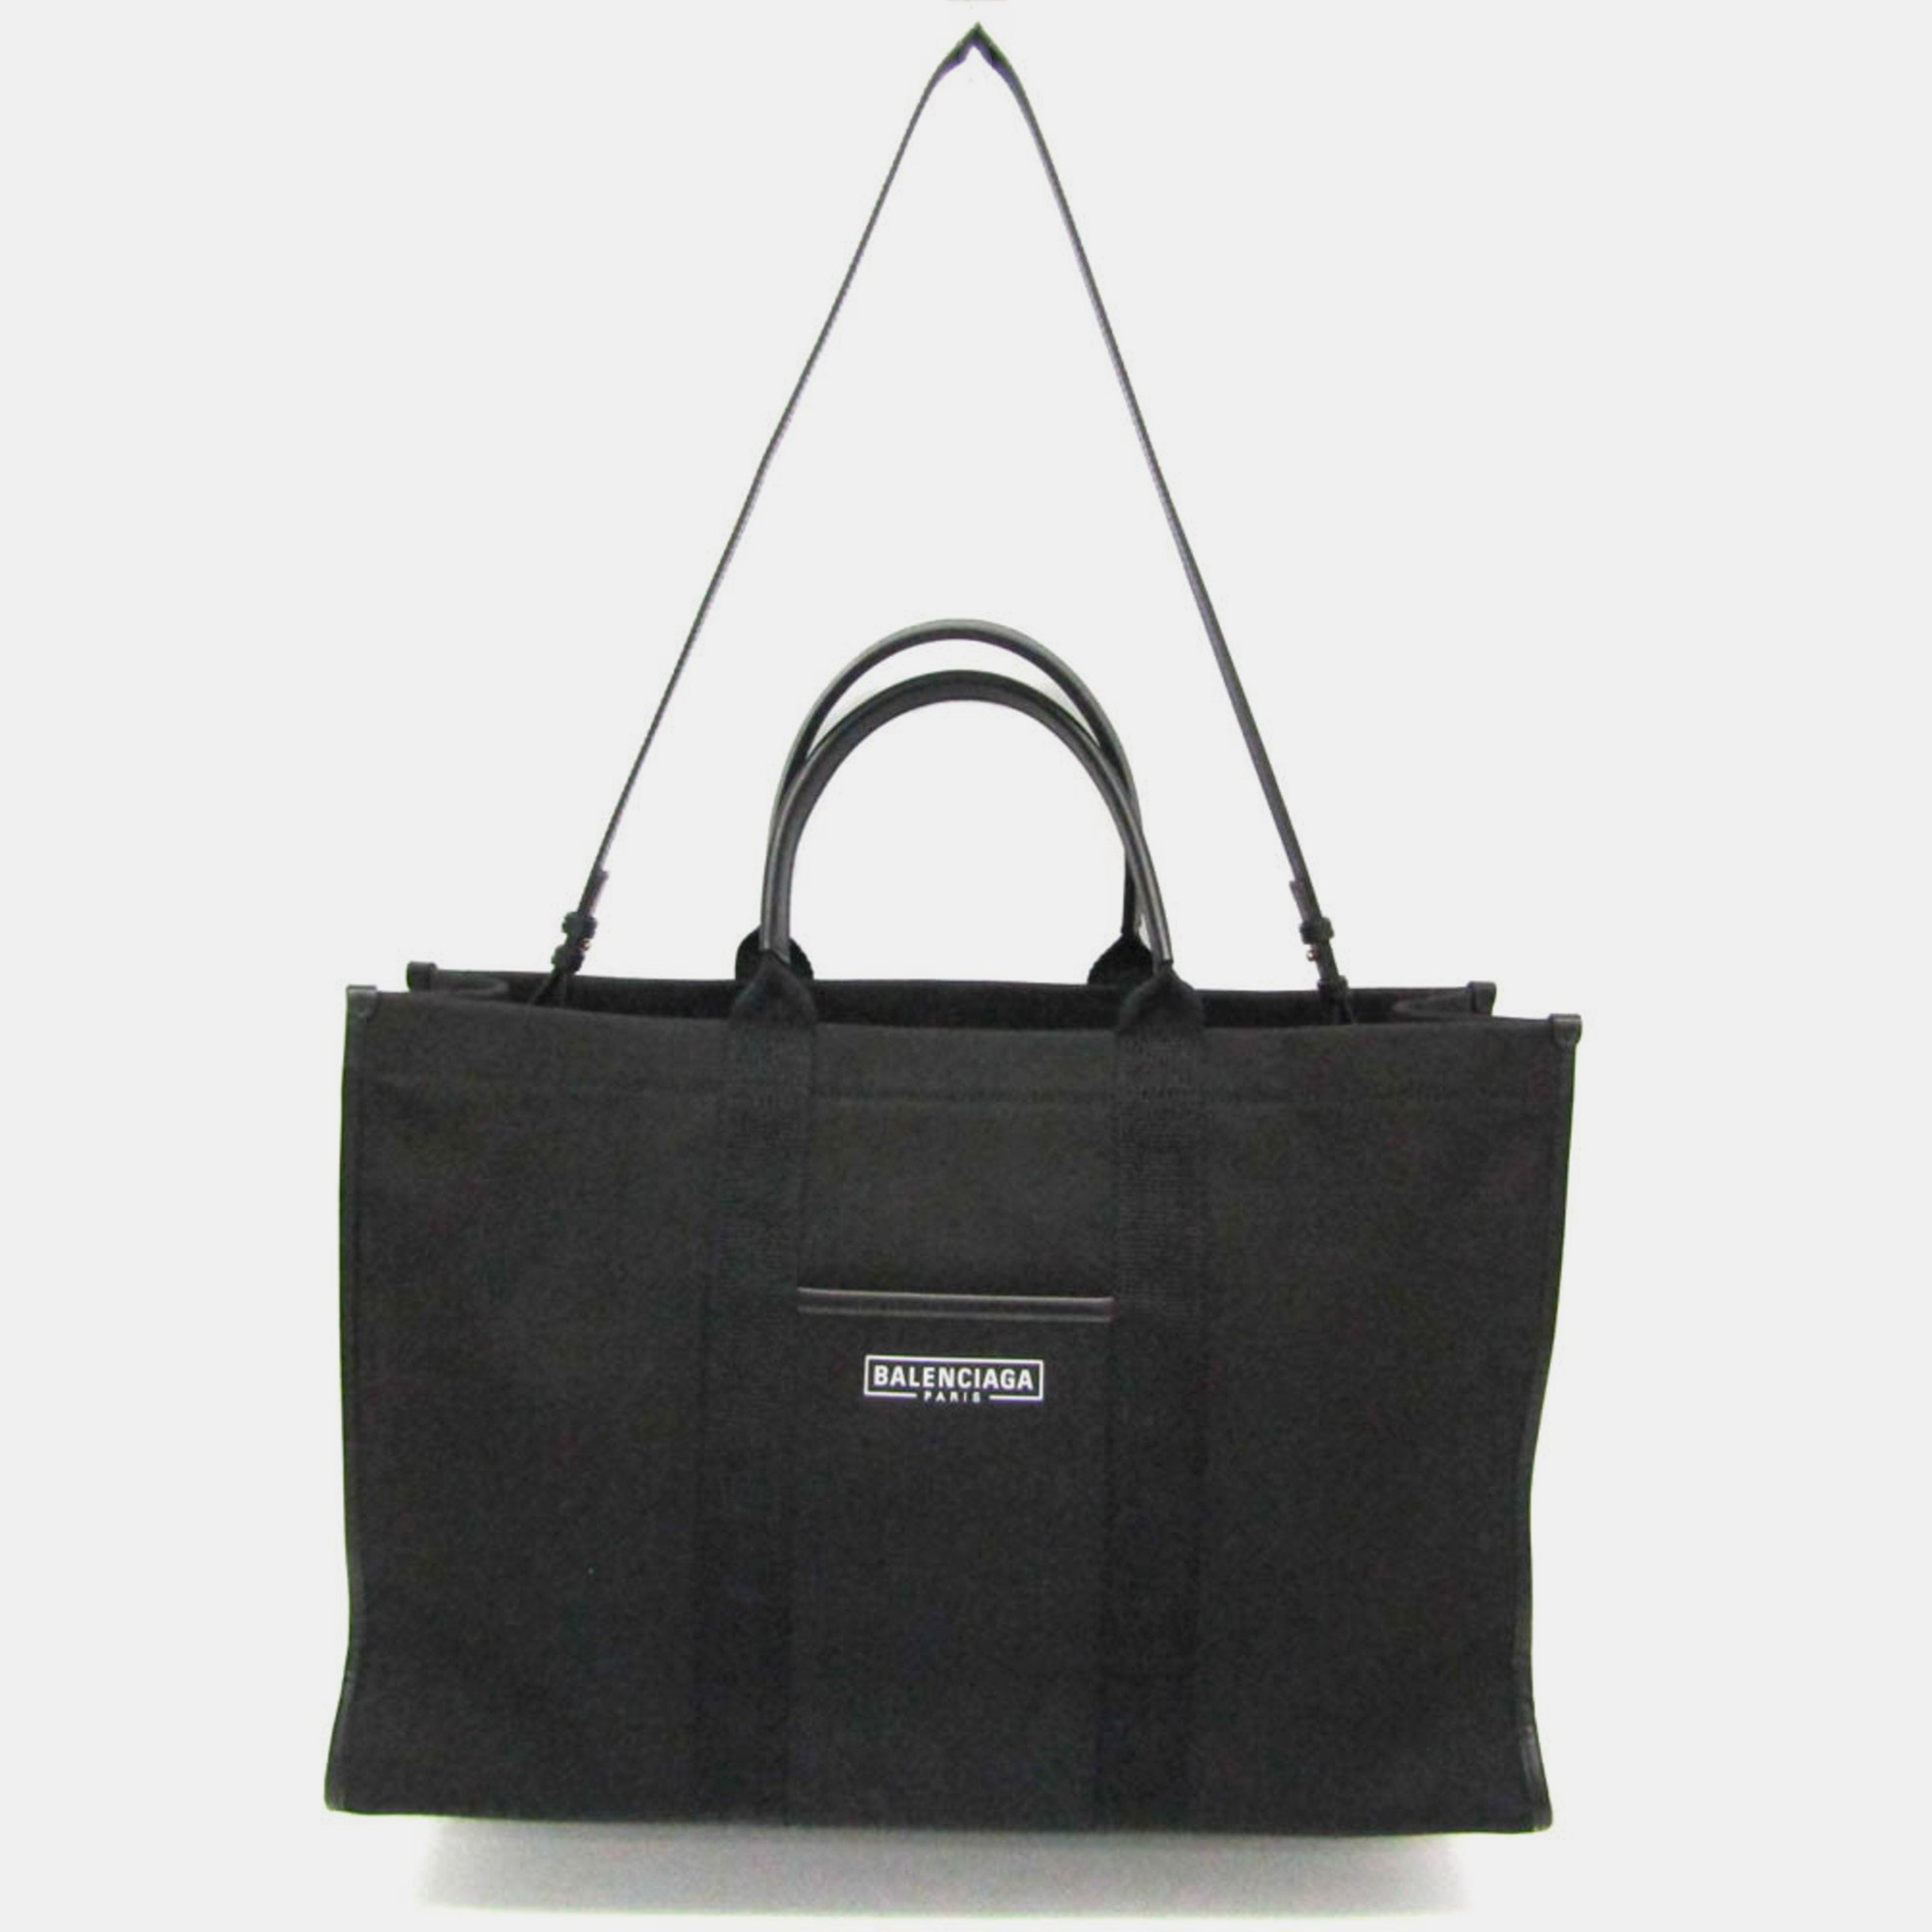 Balenciaga black canvas medium hardware tote bag